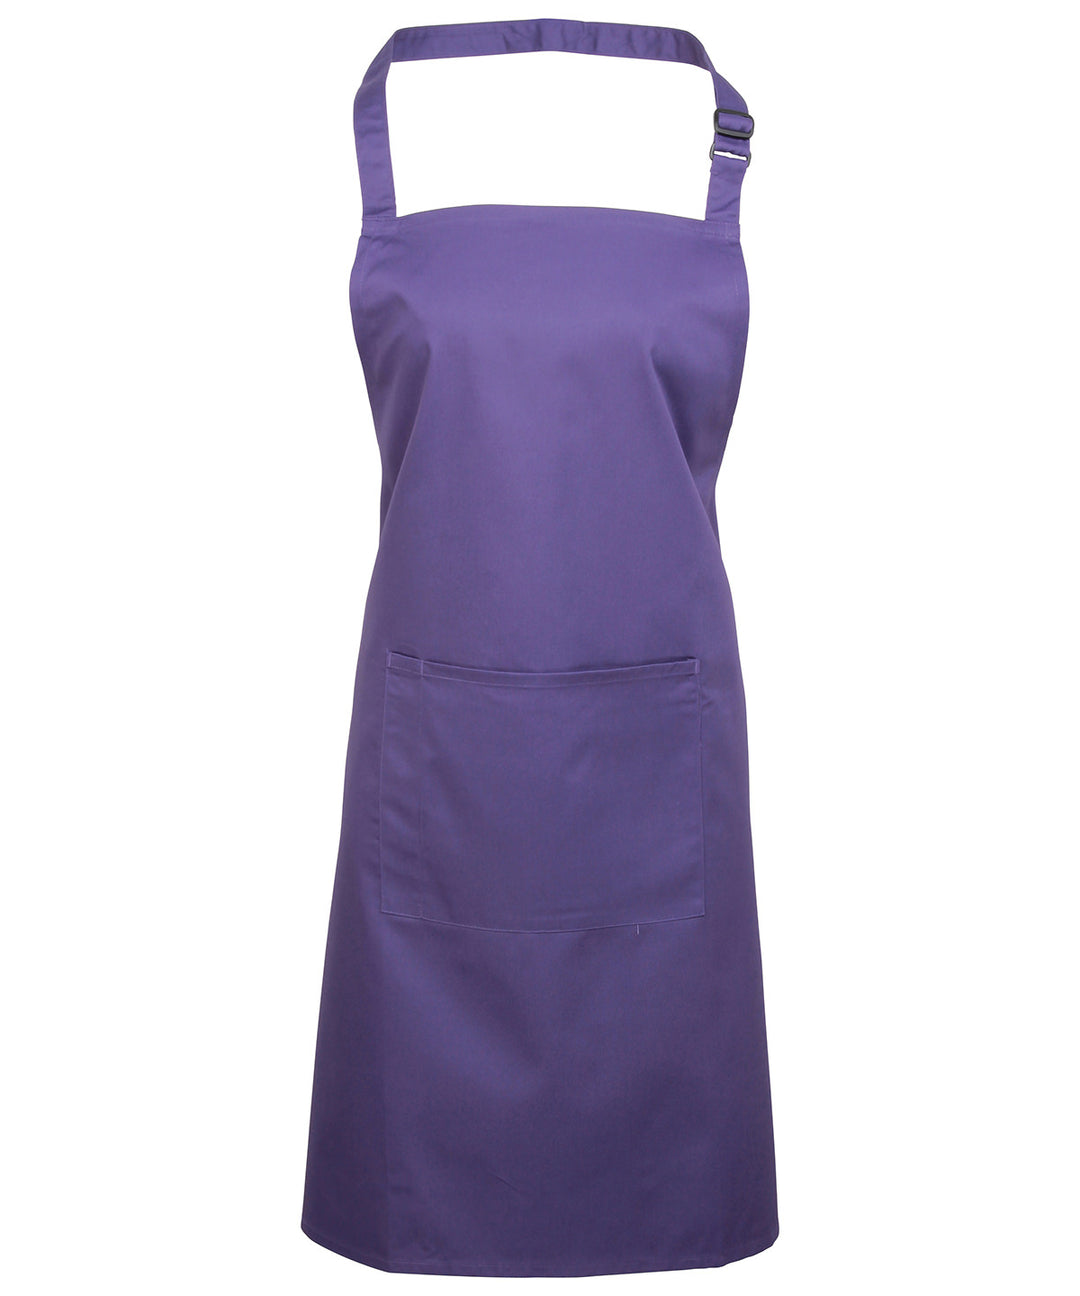 a purple apron on a white background